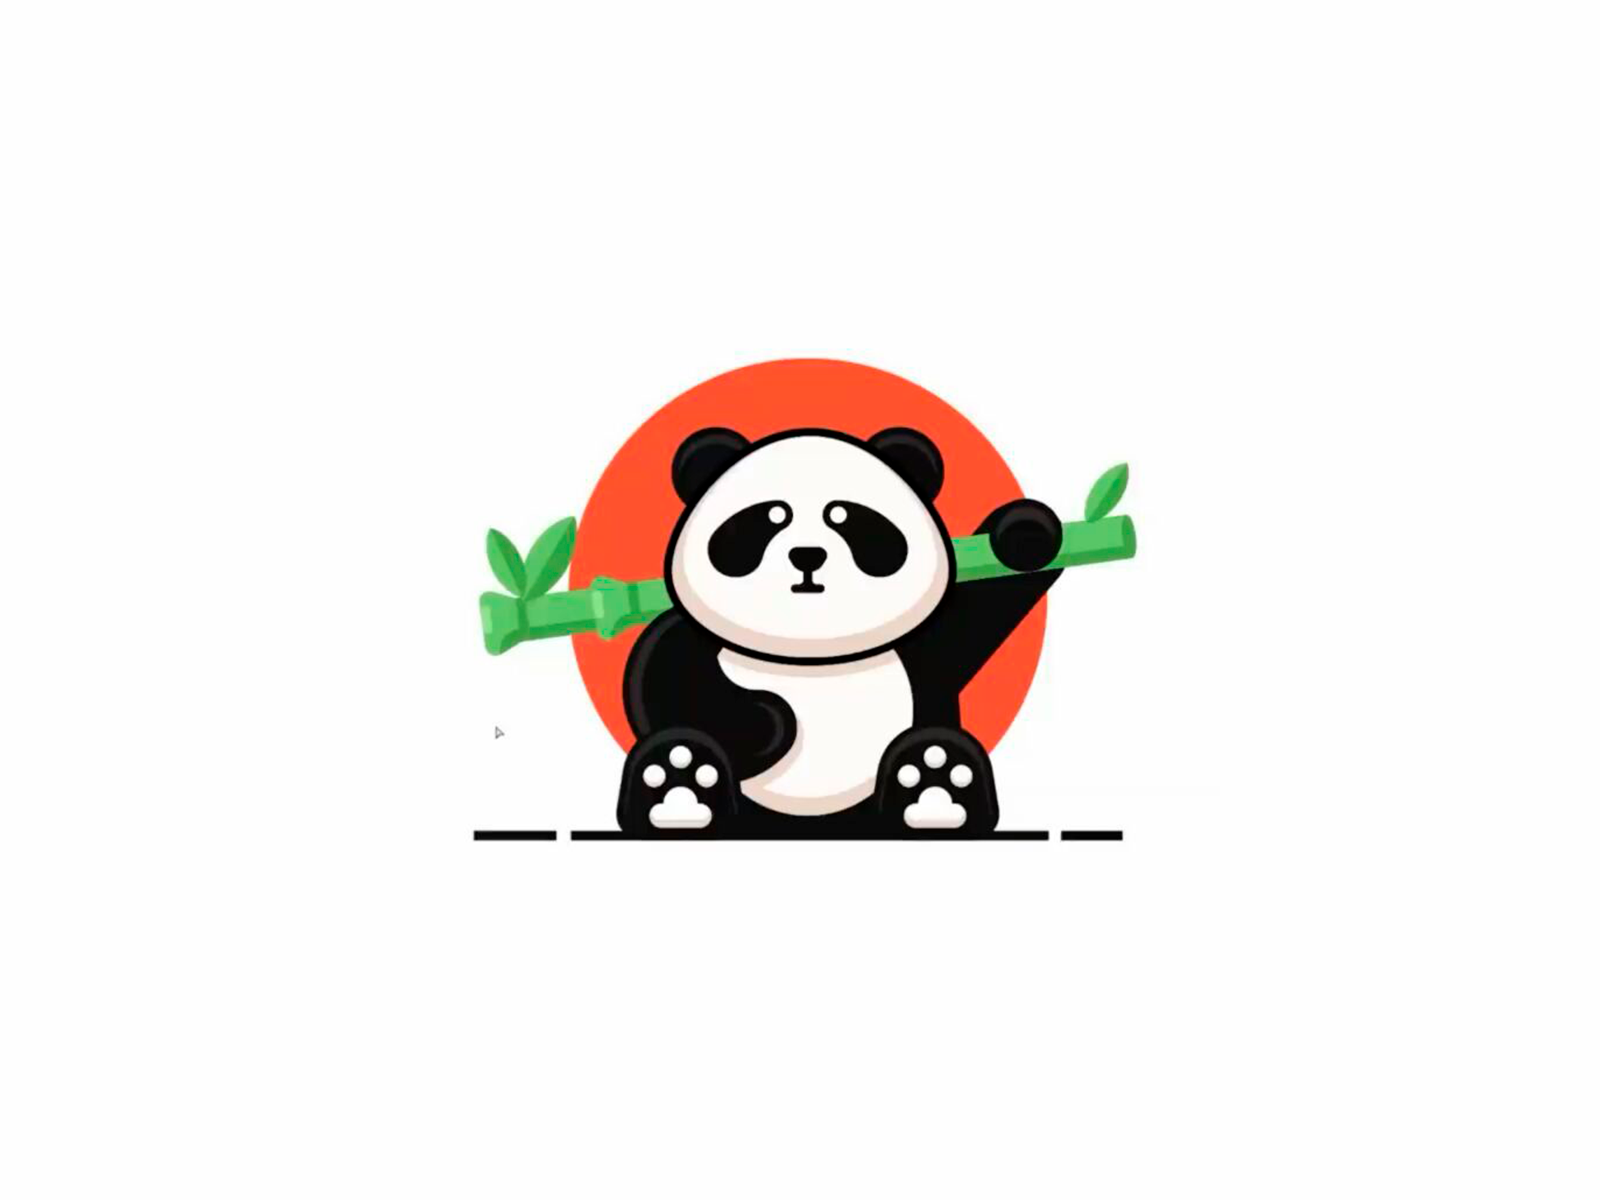 Panda - Logo by Andrew White on Dribbble